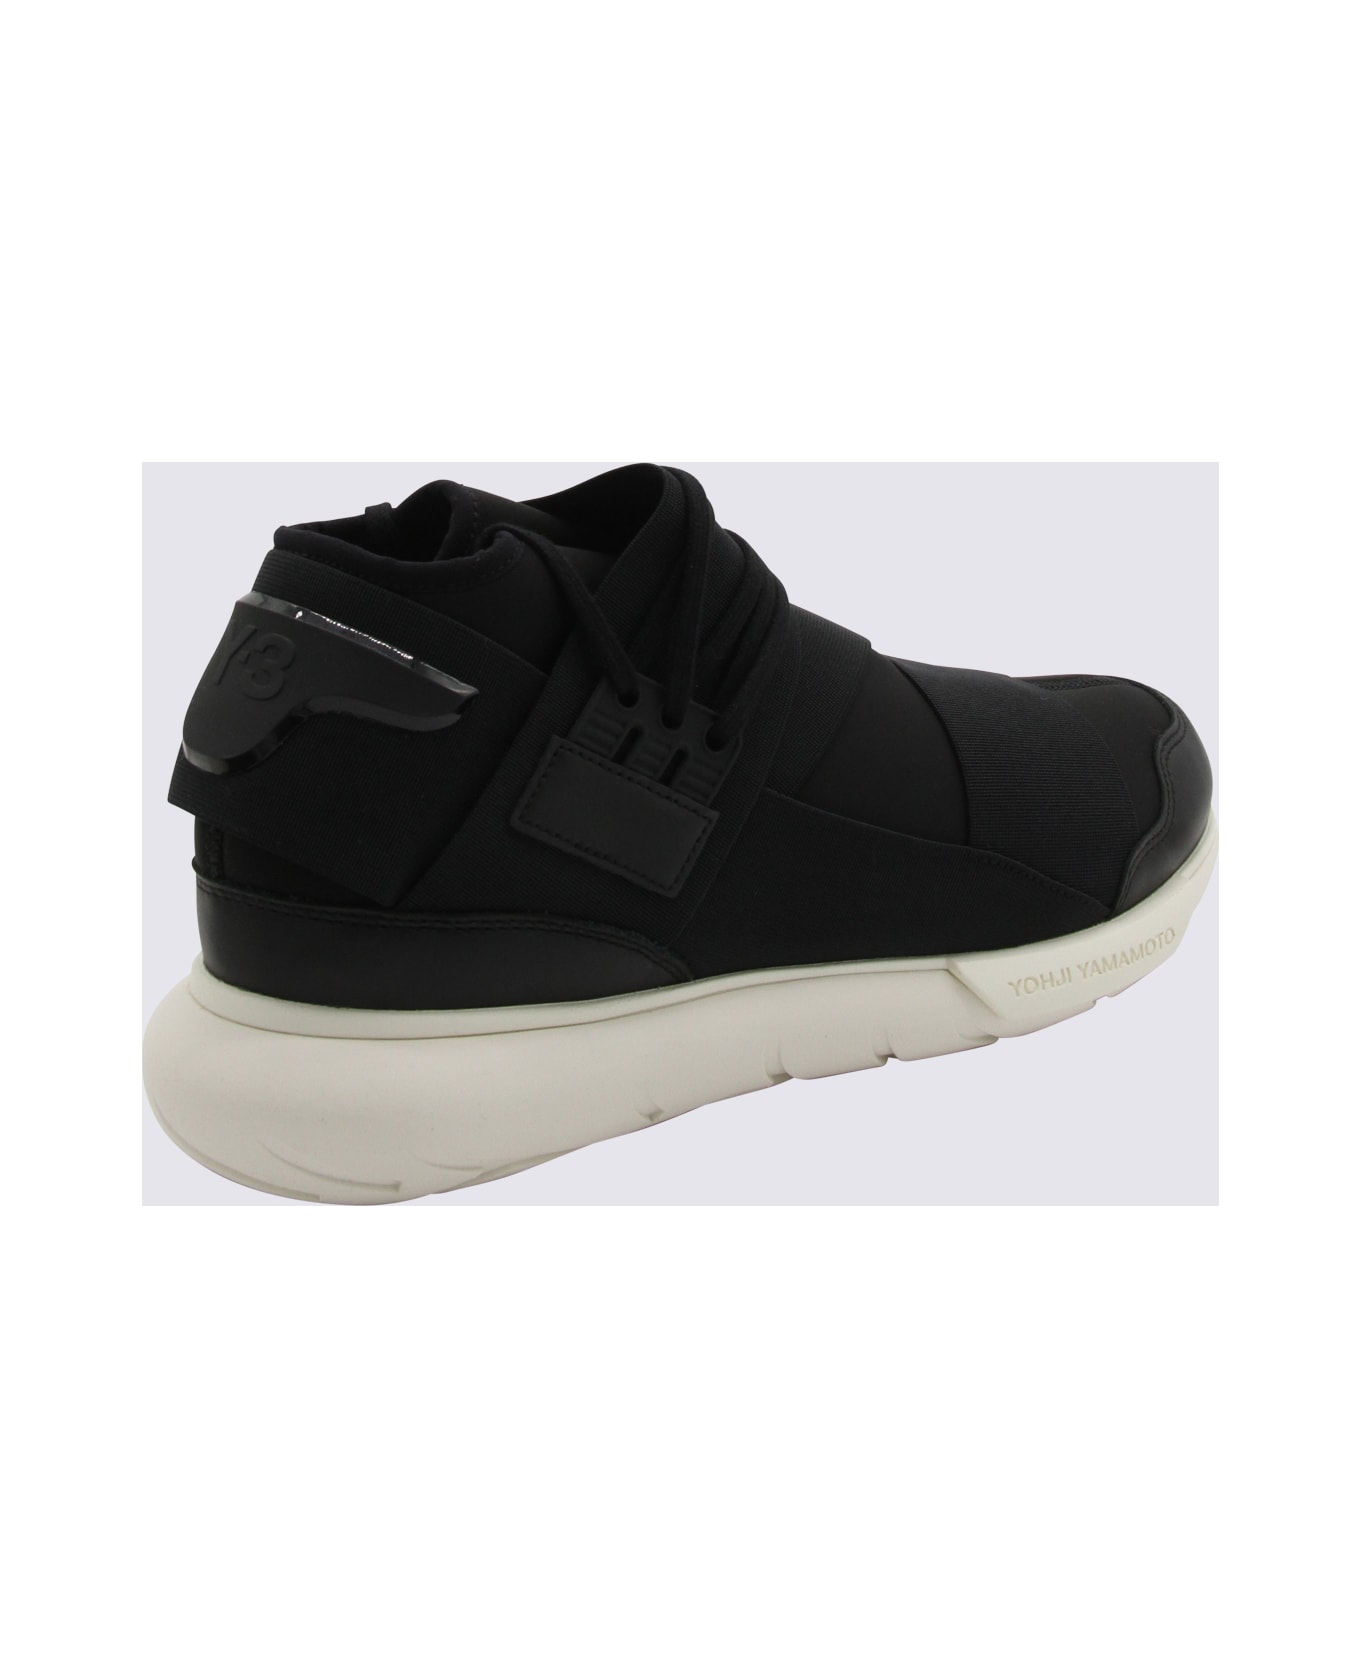 Y-3 Black And Off White Qasa Sneakers - black/black/off white